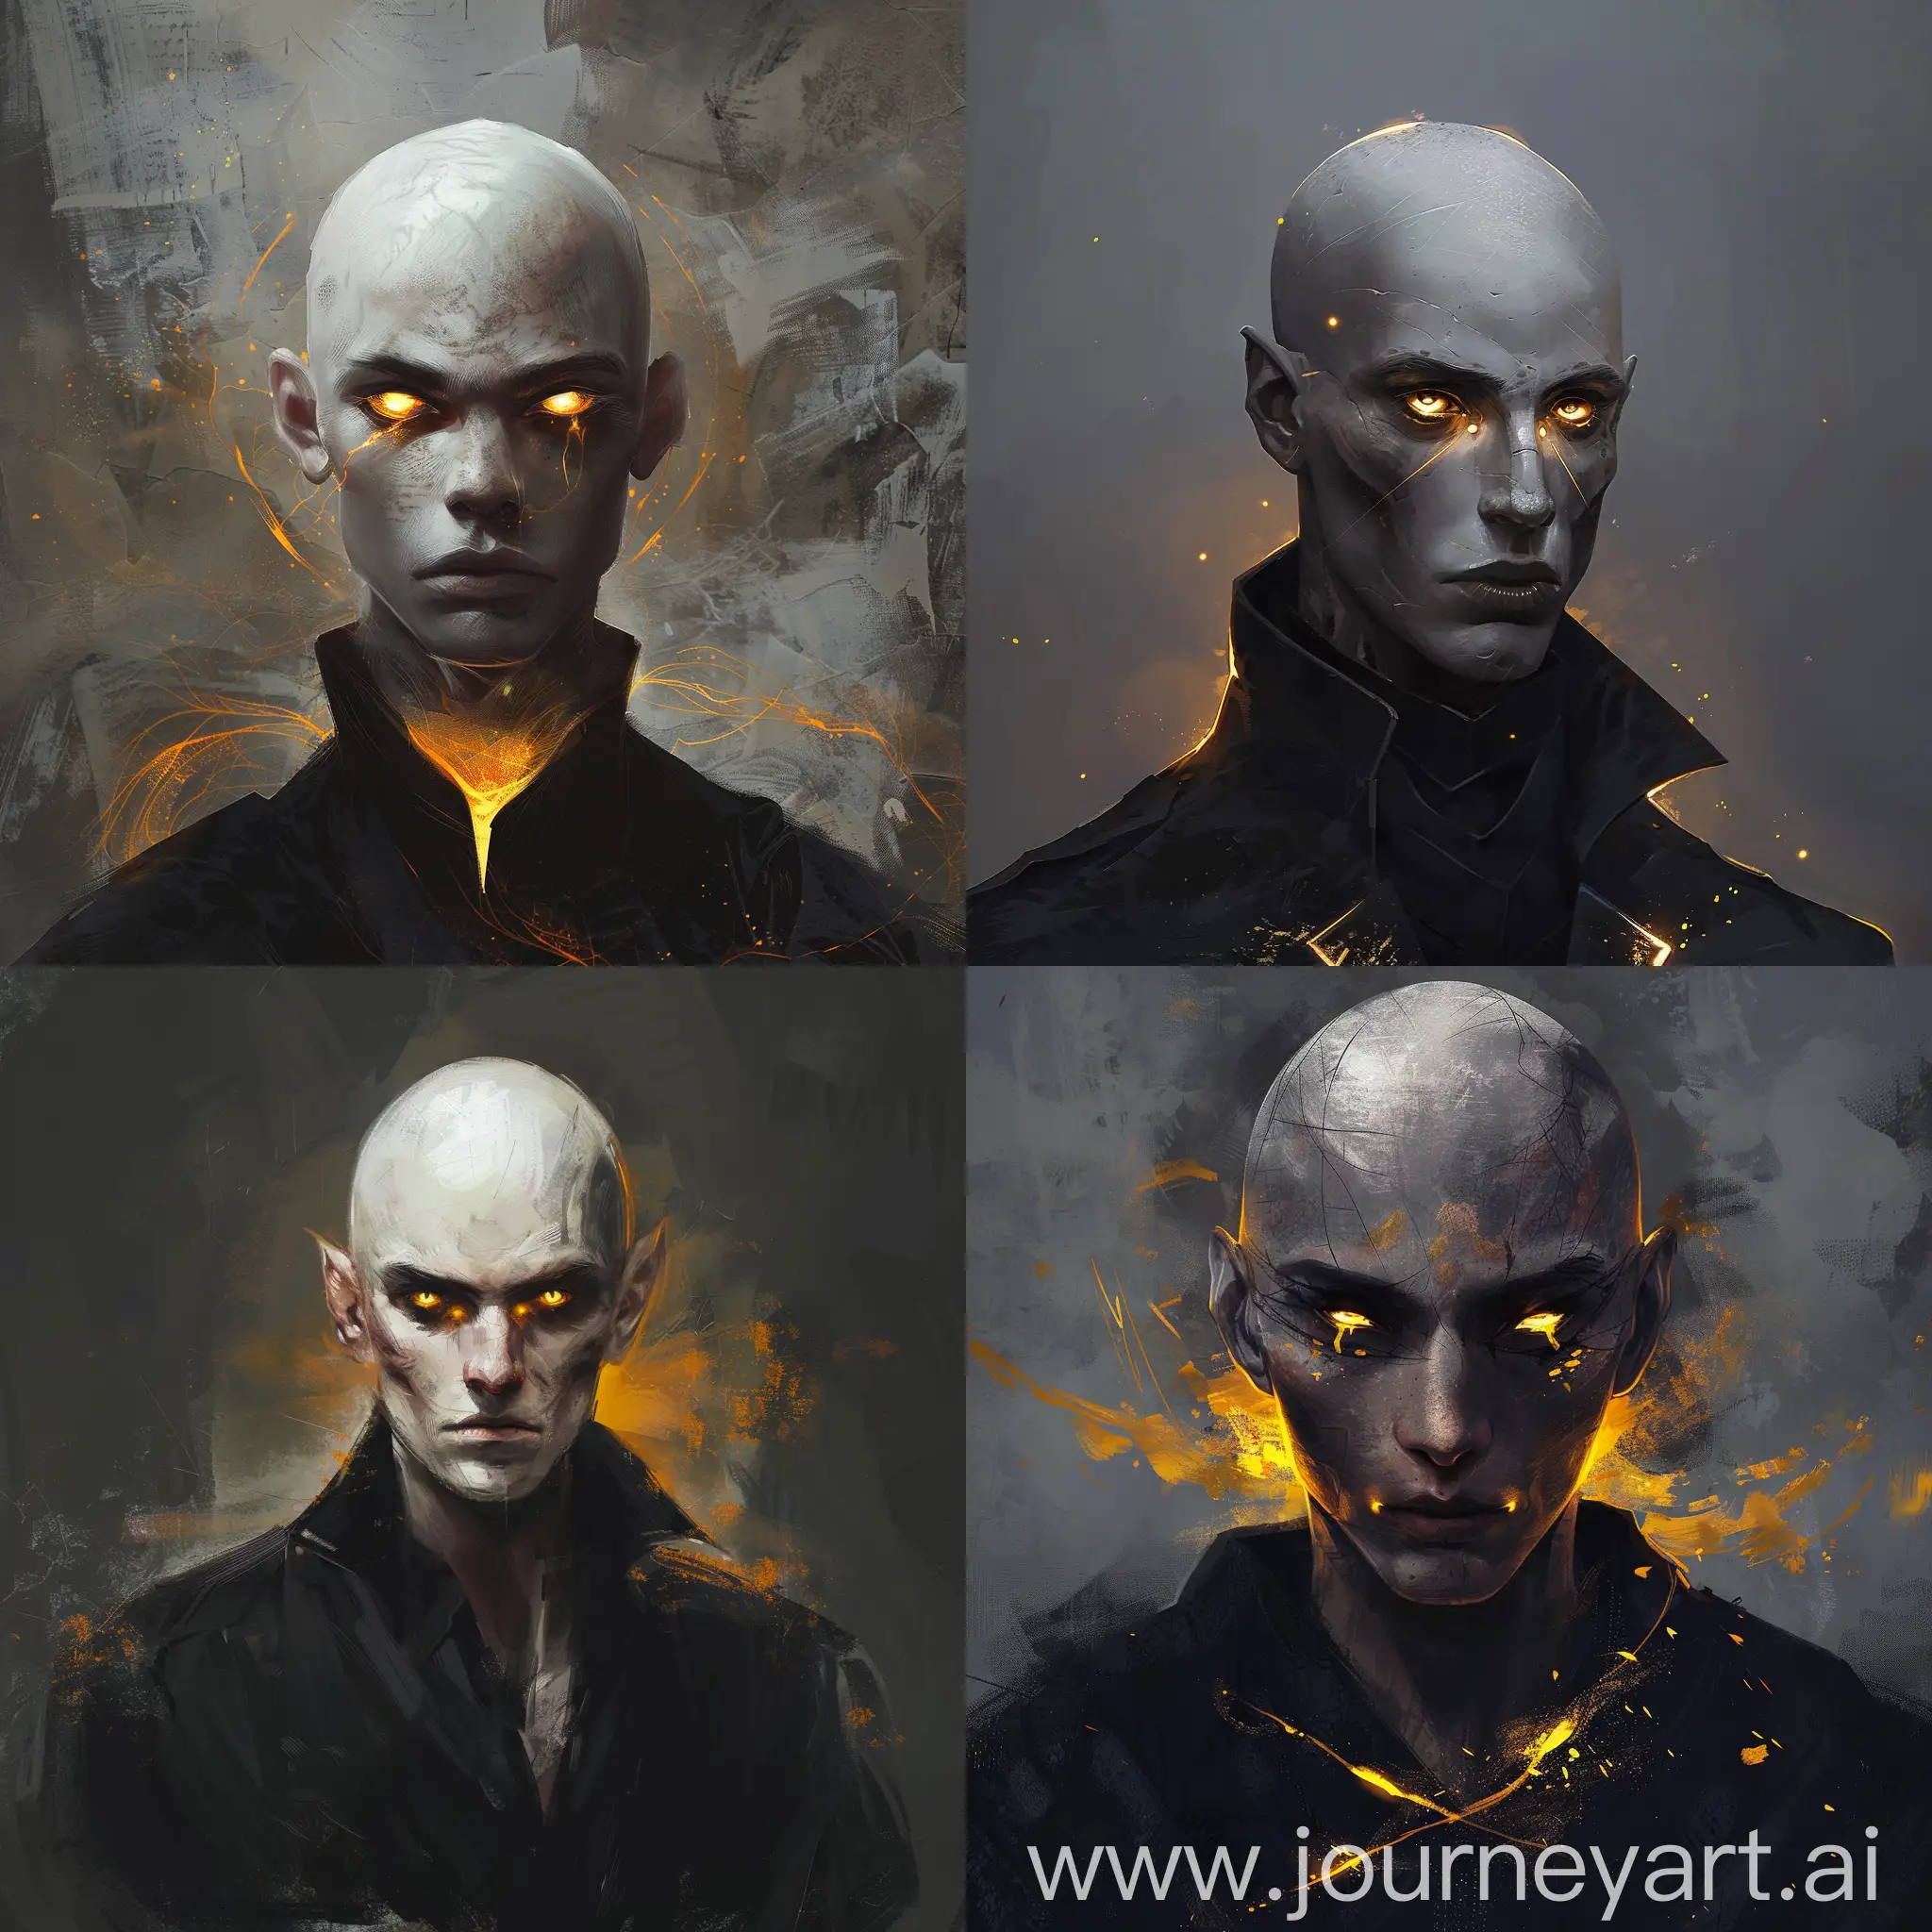 Fantasy-Art-Sinister-Bald-Man-with-Golden-Eyes